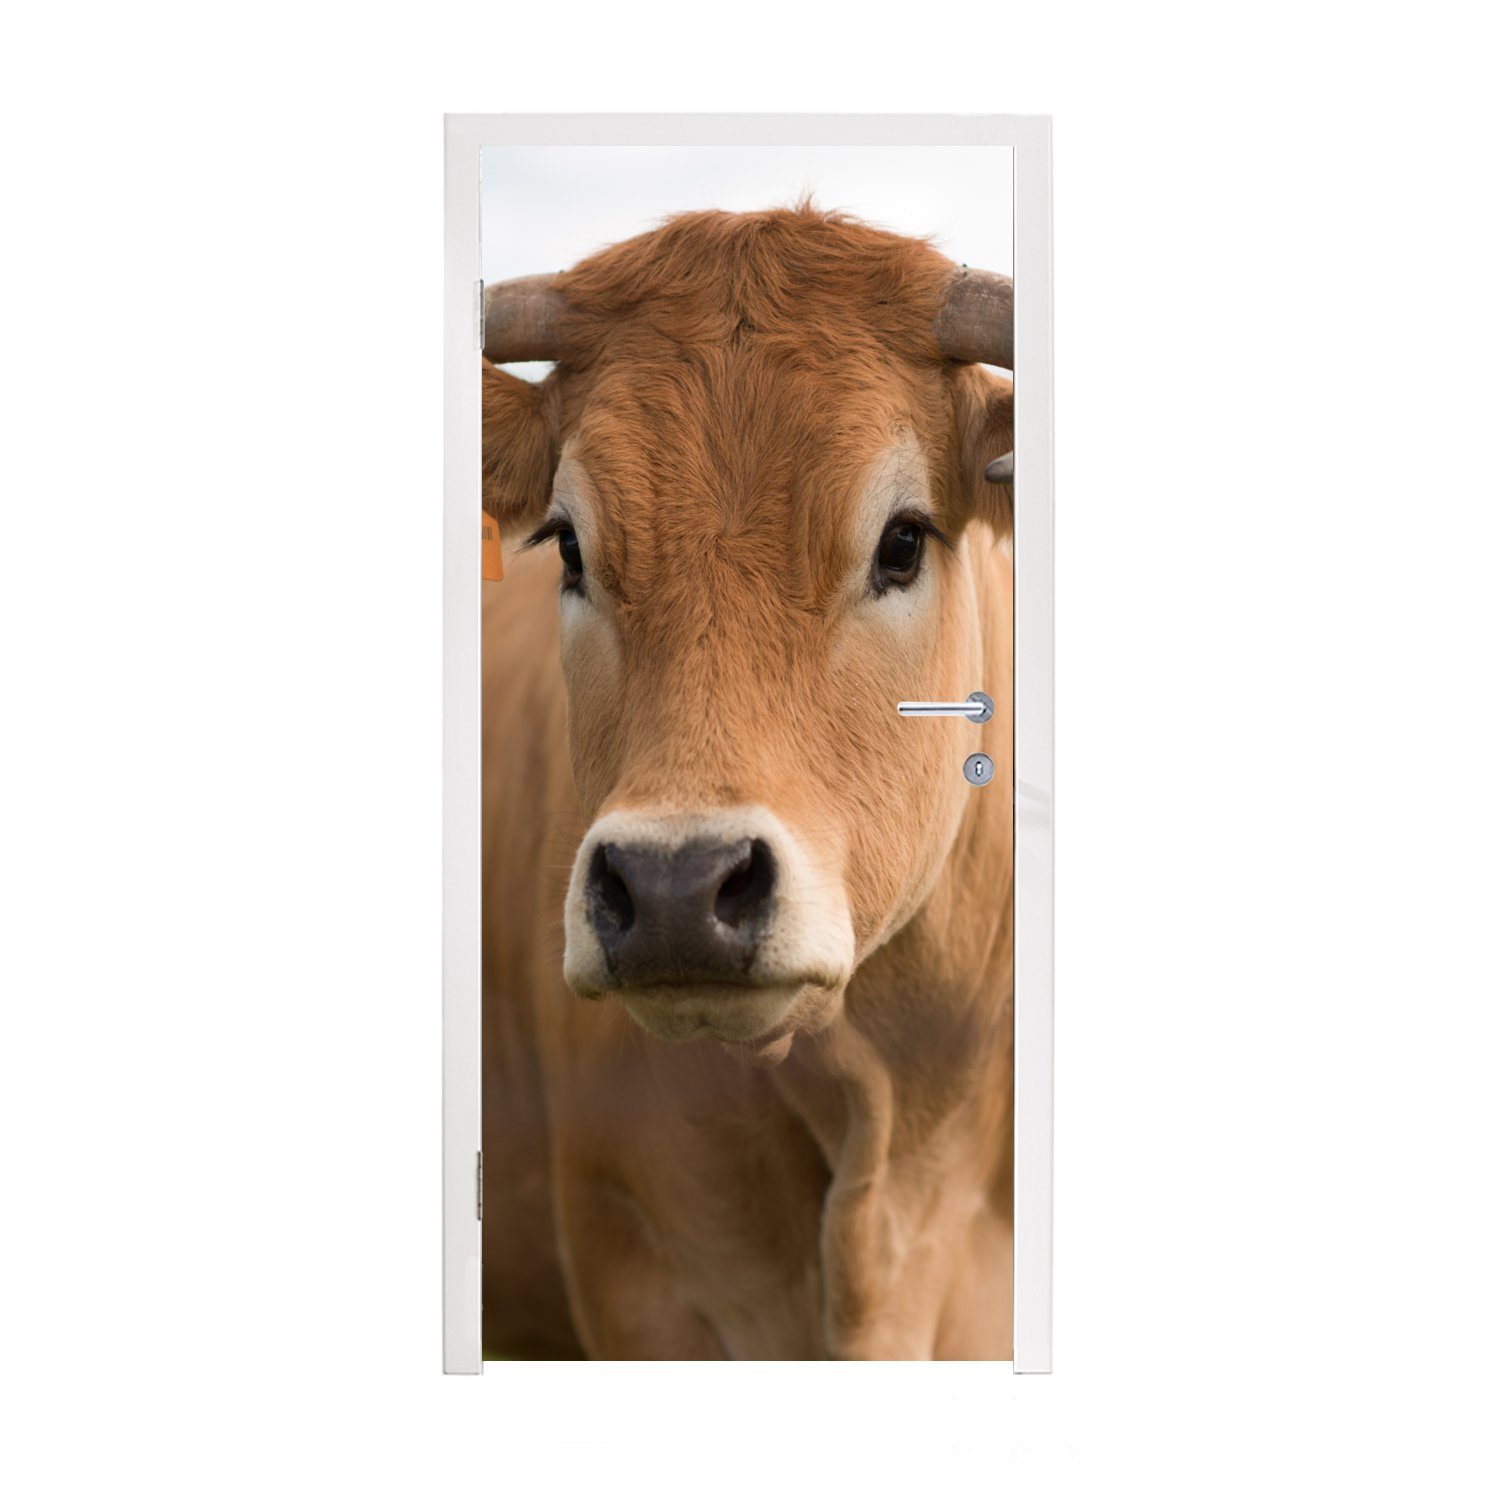 MuchoWow Türtapete Kuh - Horn - Porträt, Matt, bedruckt, (1 St), Fototapete für Tür, Türaufkleber, 75x205 cm